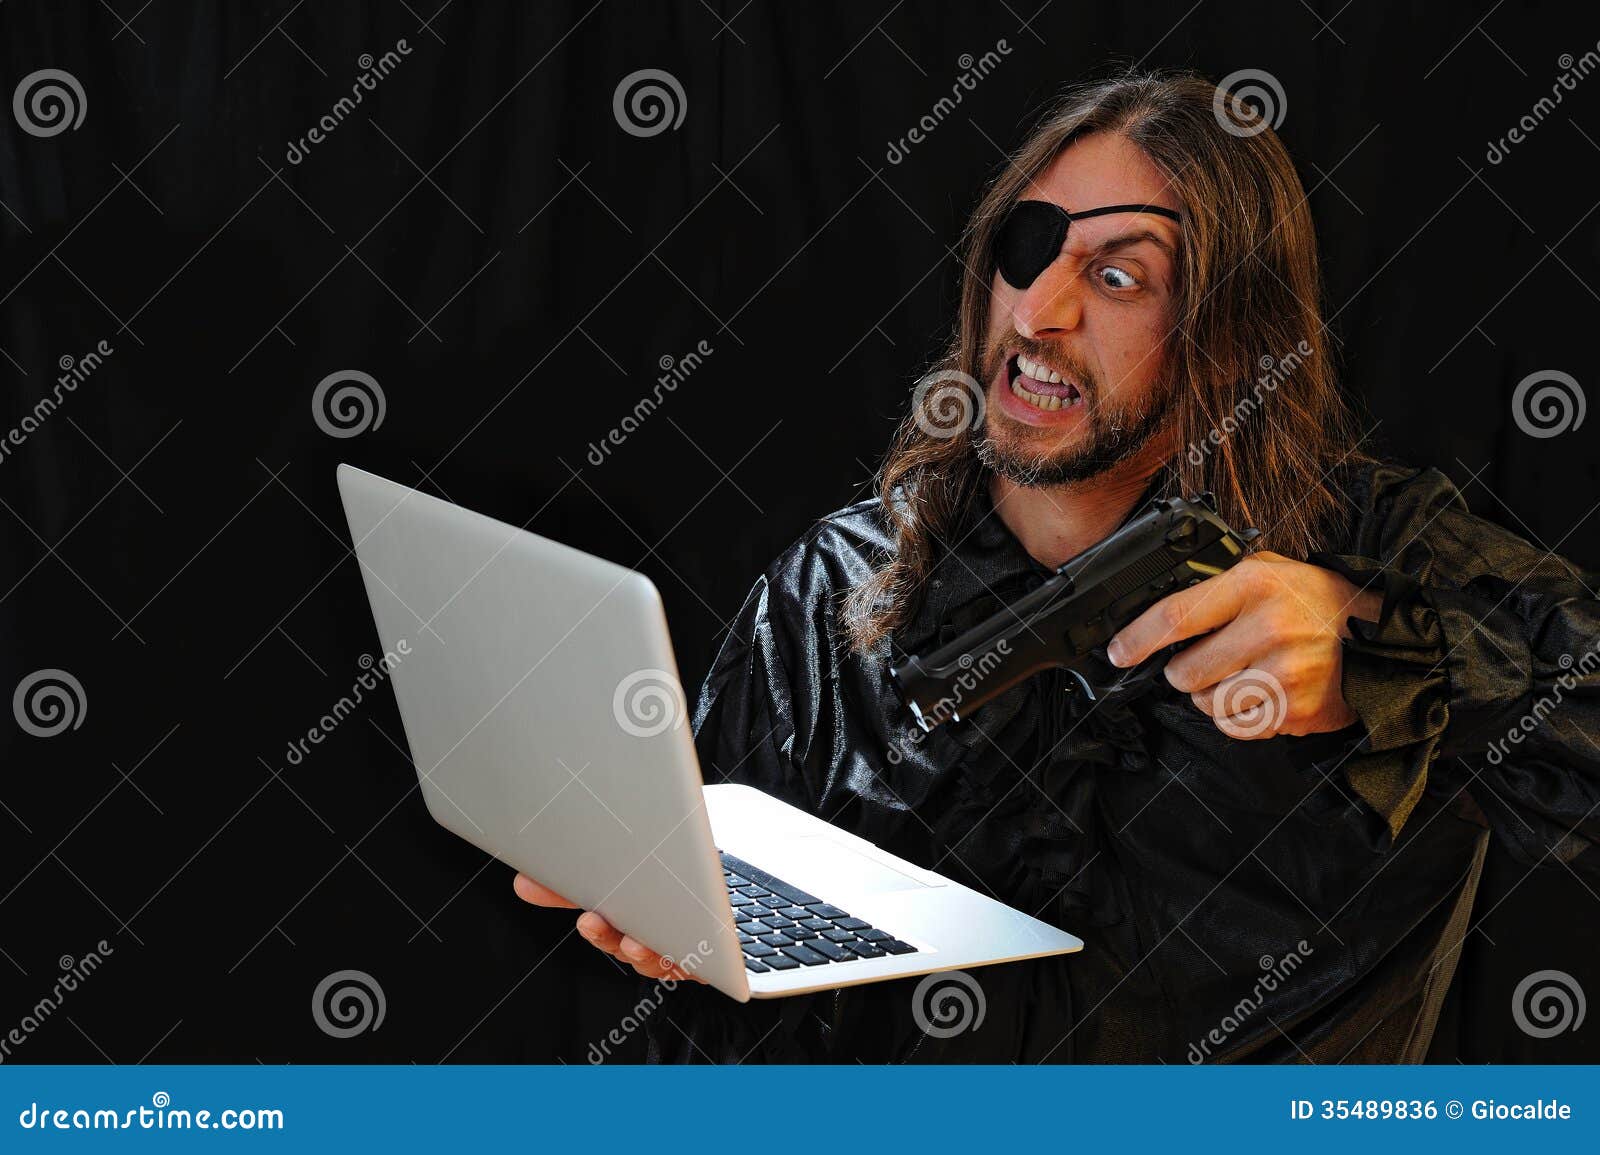 hacker-attack-pirate-attacks-computer-gu